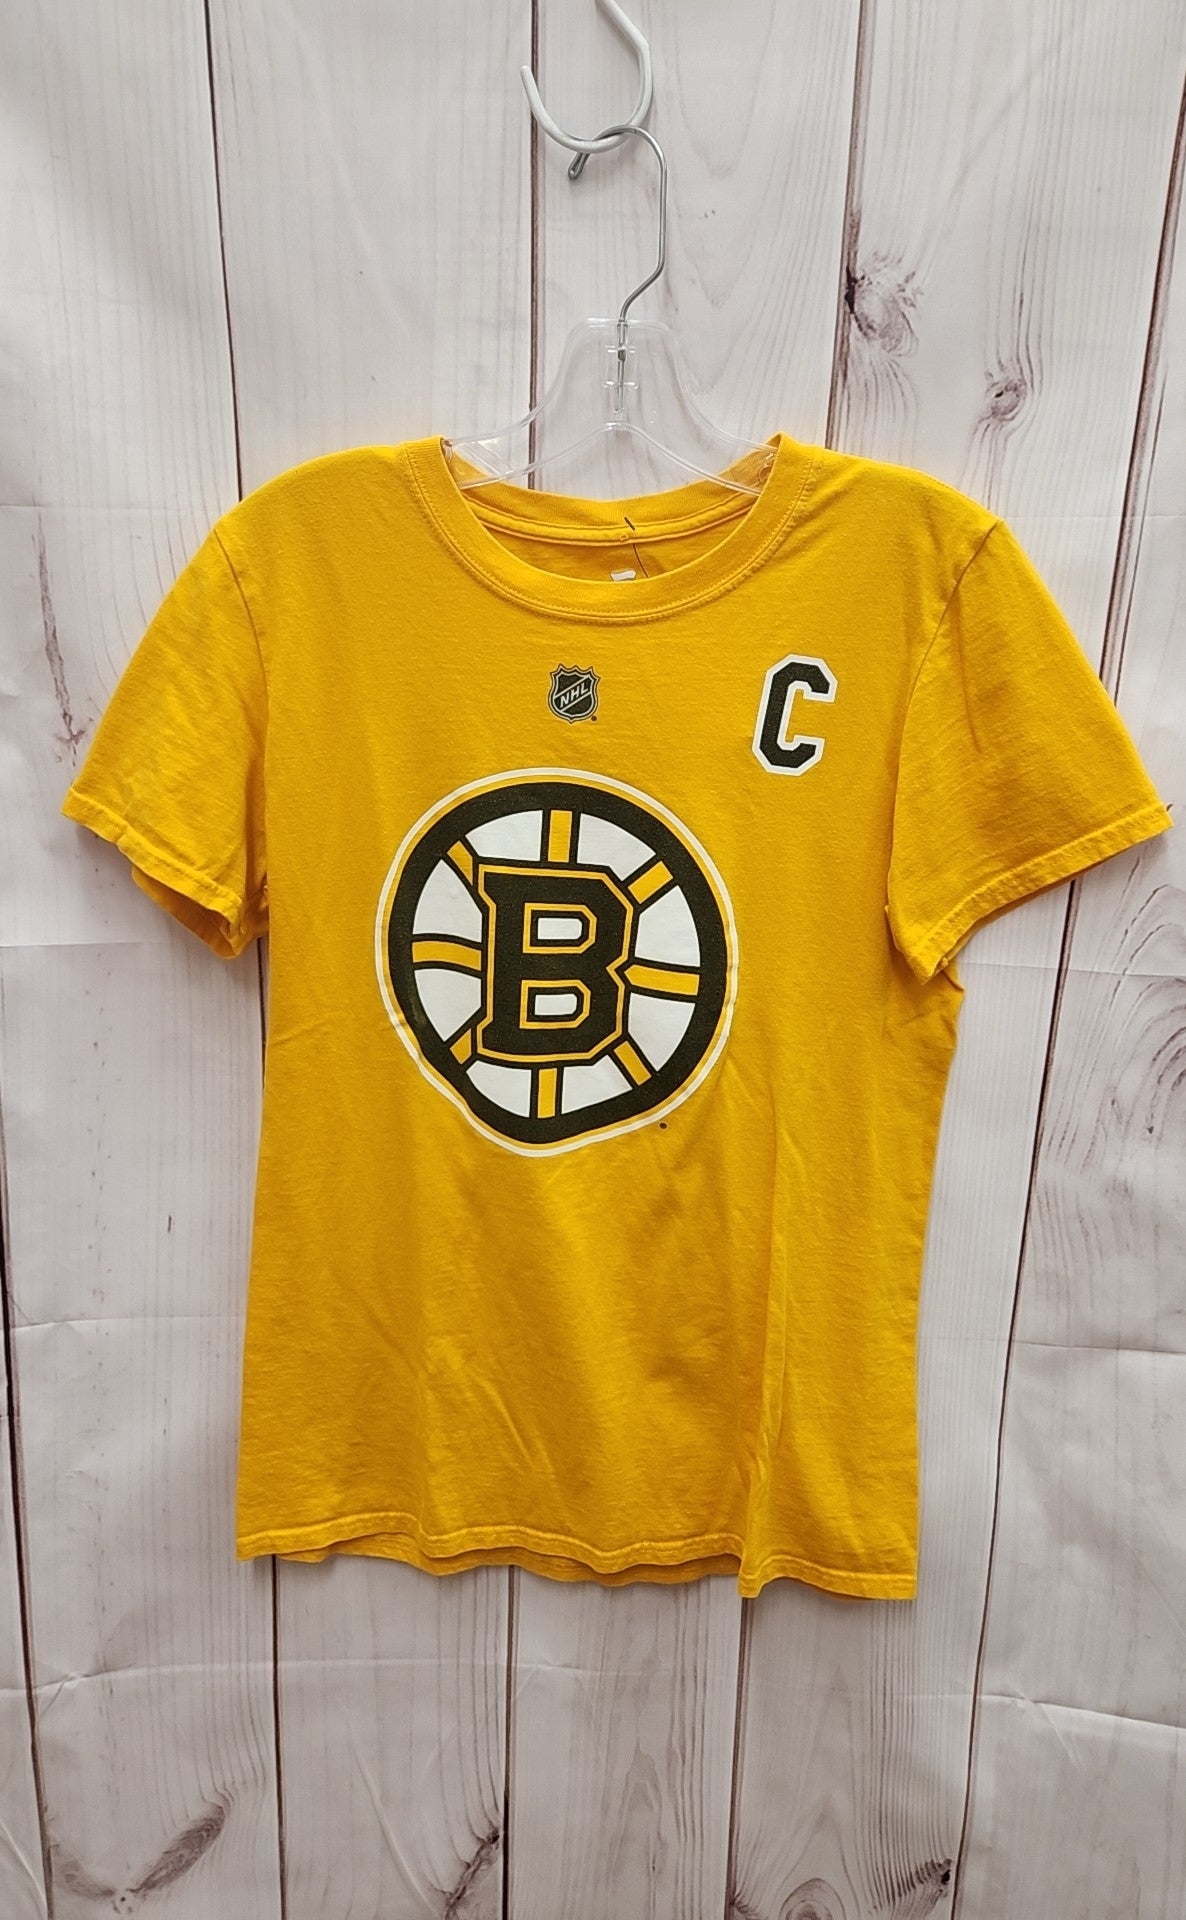 Bruins Women's Size S Yellow Short Sleeve Top